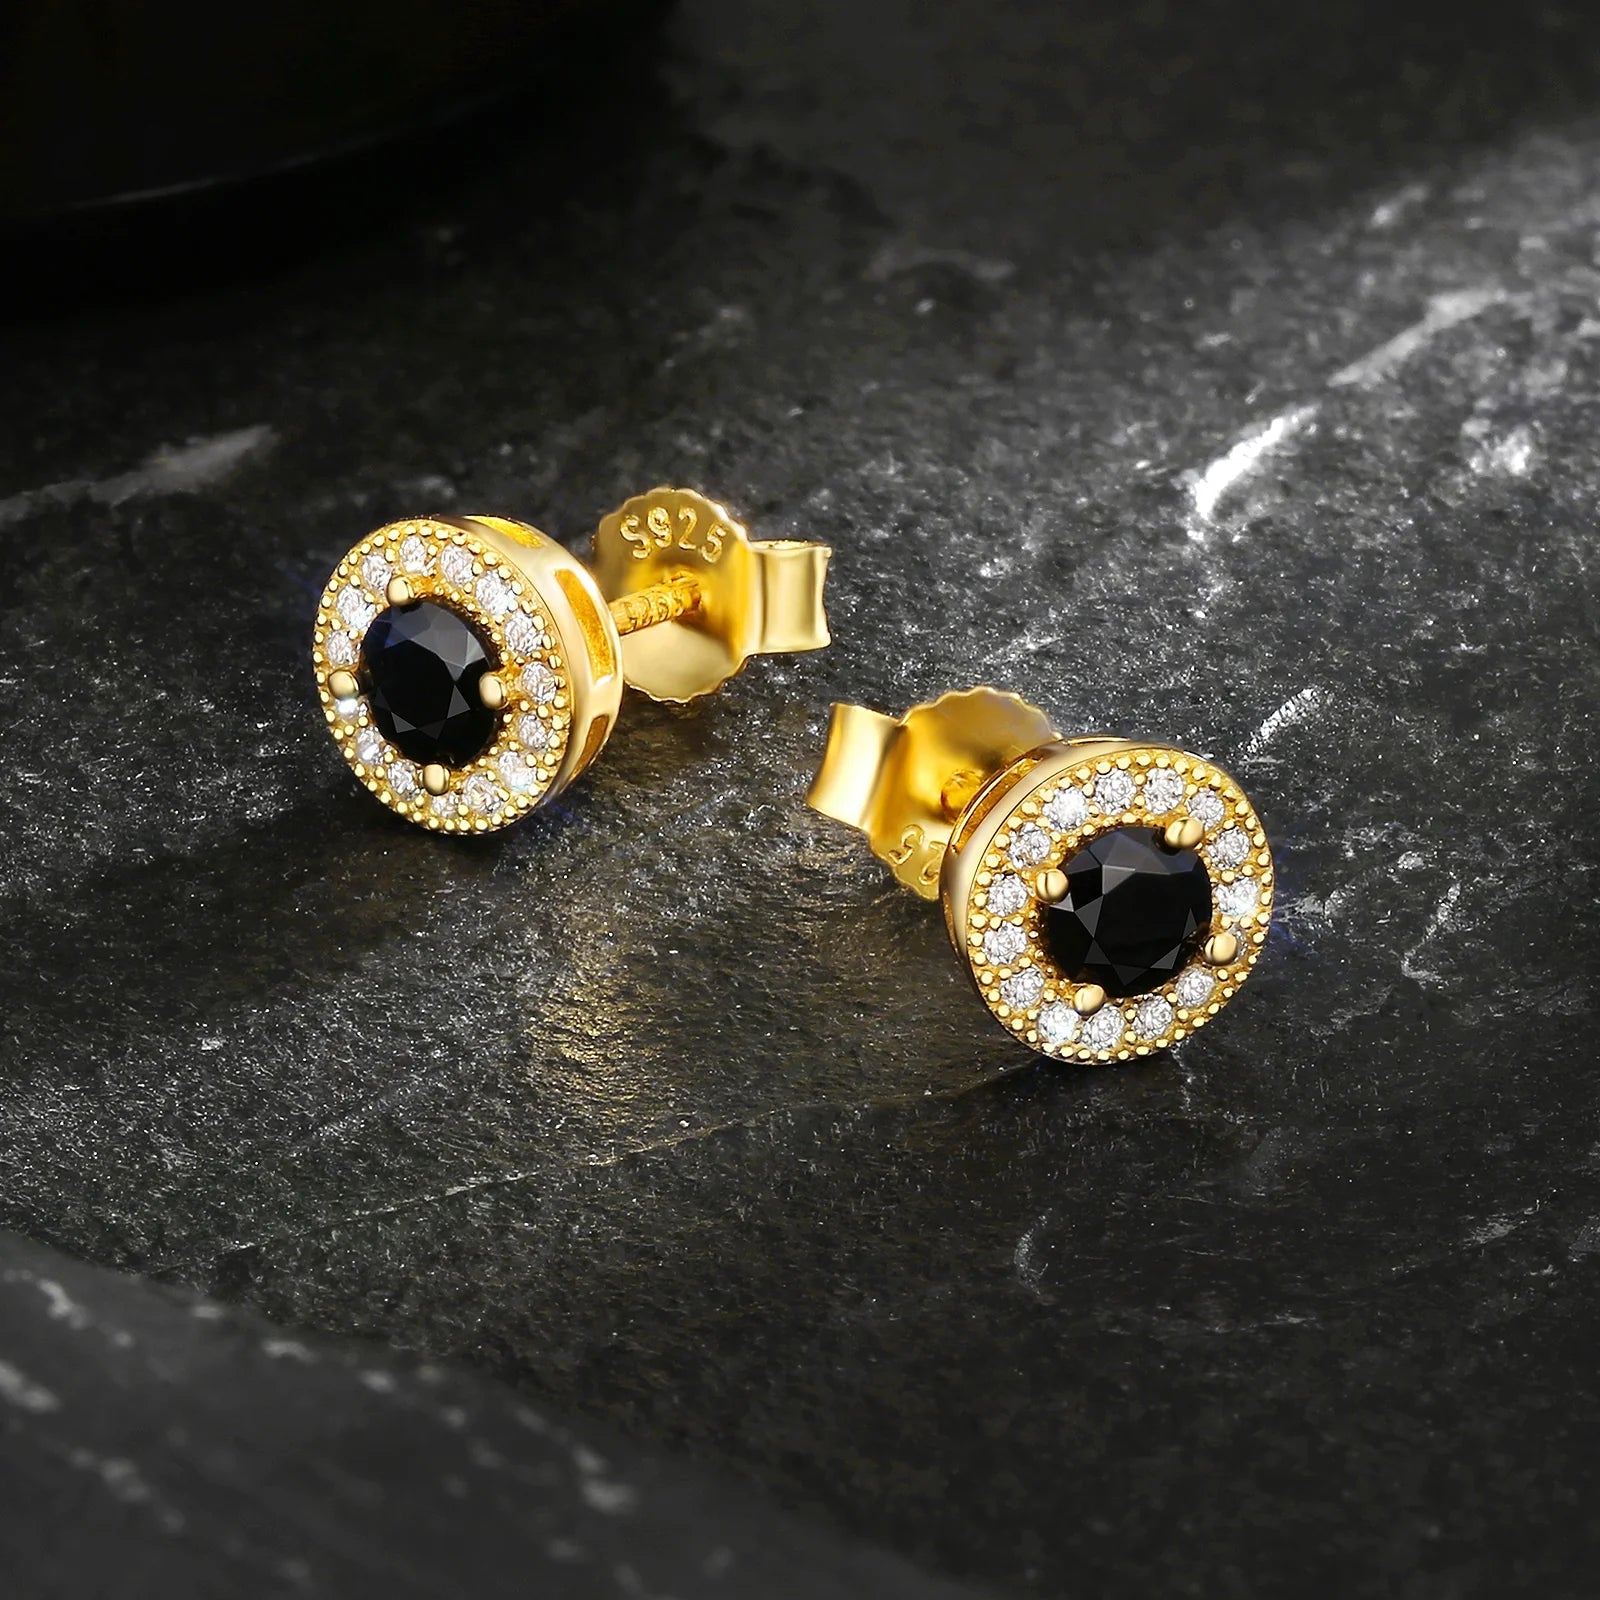 7.5mm Black Diamond Round Stud Earrings in 14K Gold 